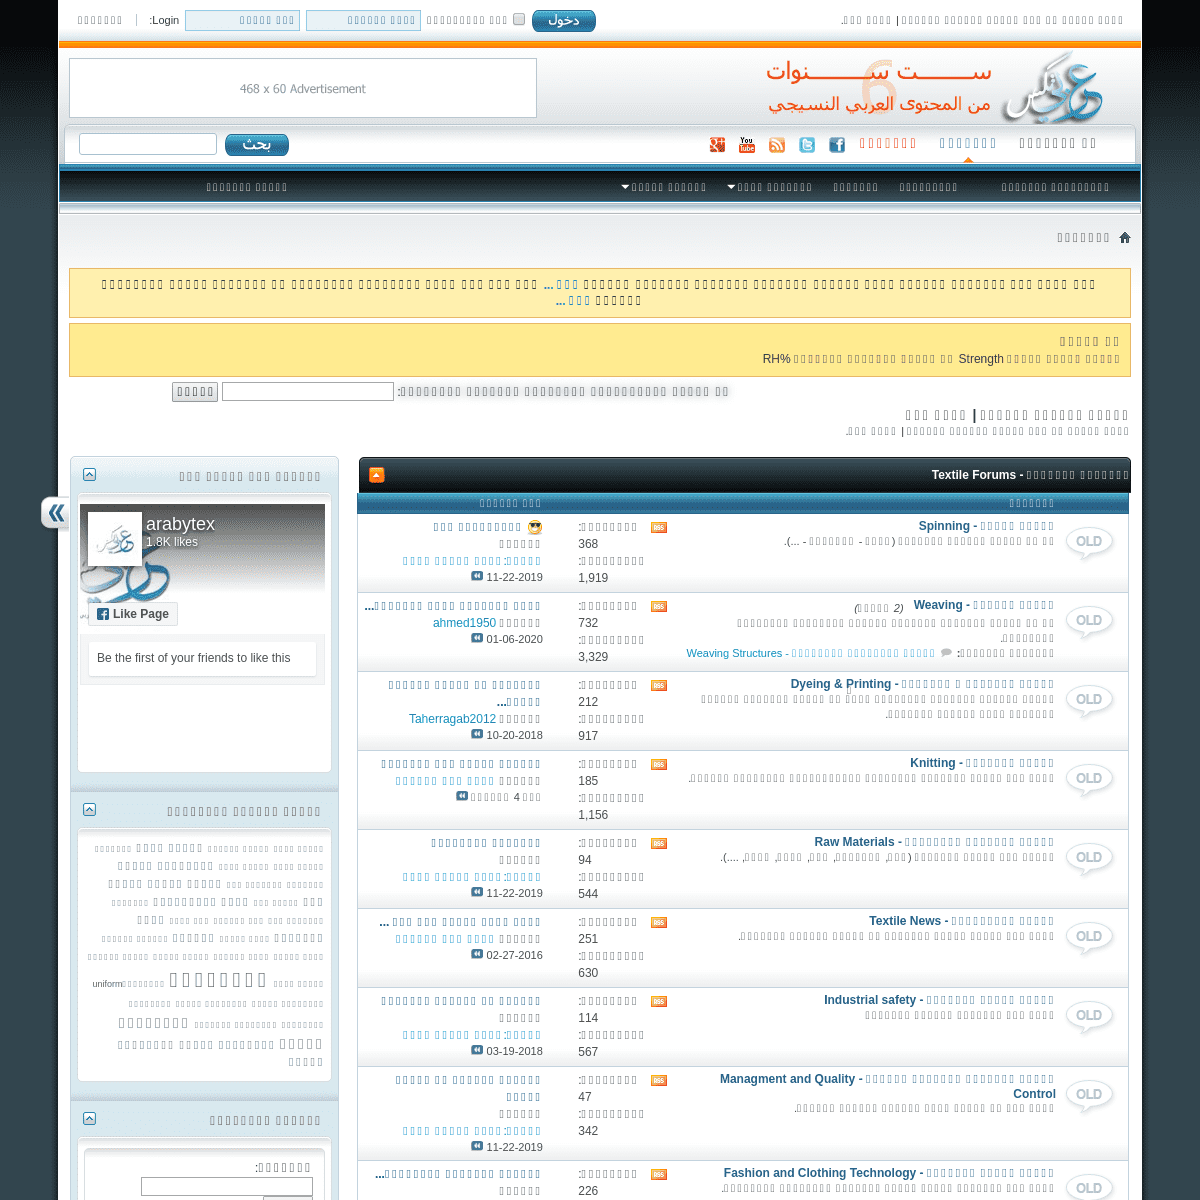 A complete backup of arabytex.com